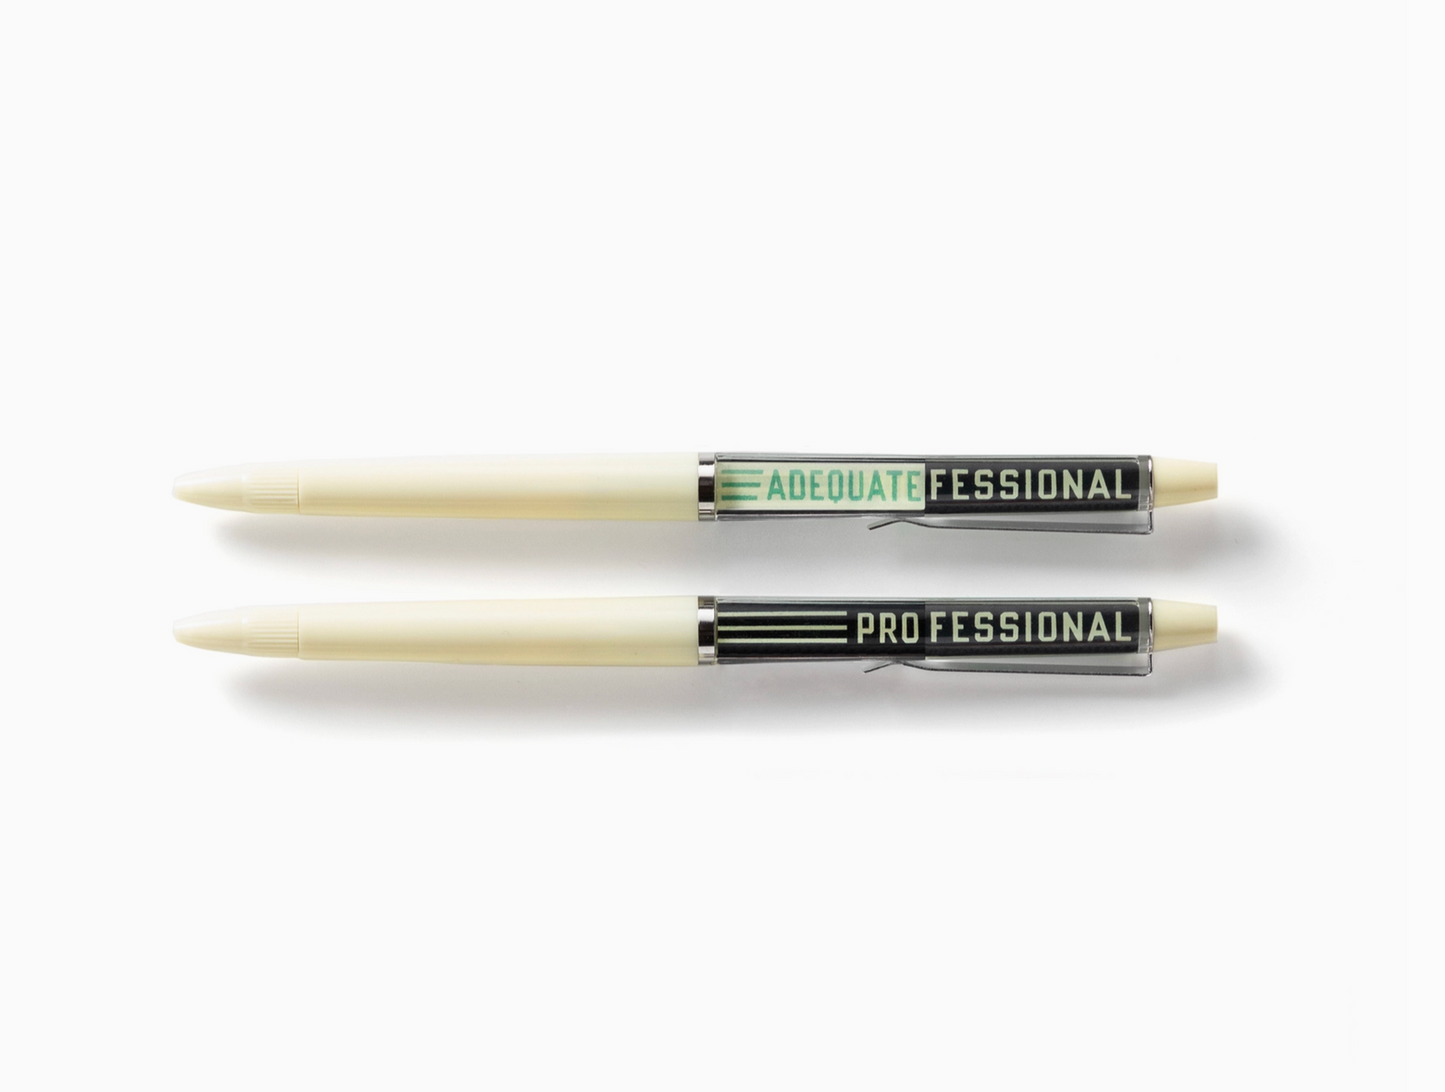 Professional Procrastinator Floaty Pen Set - Includes 2 pens